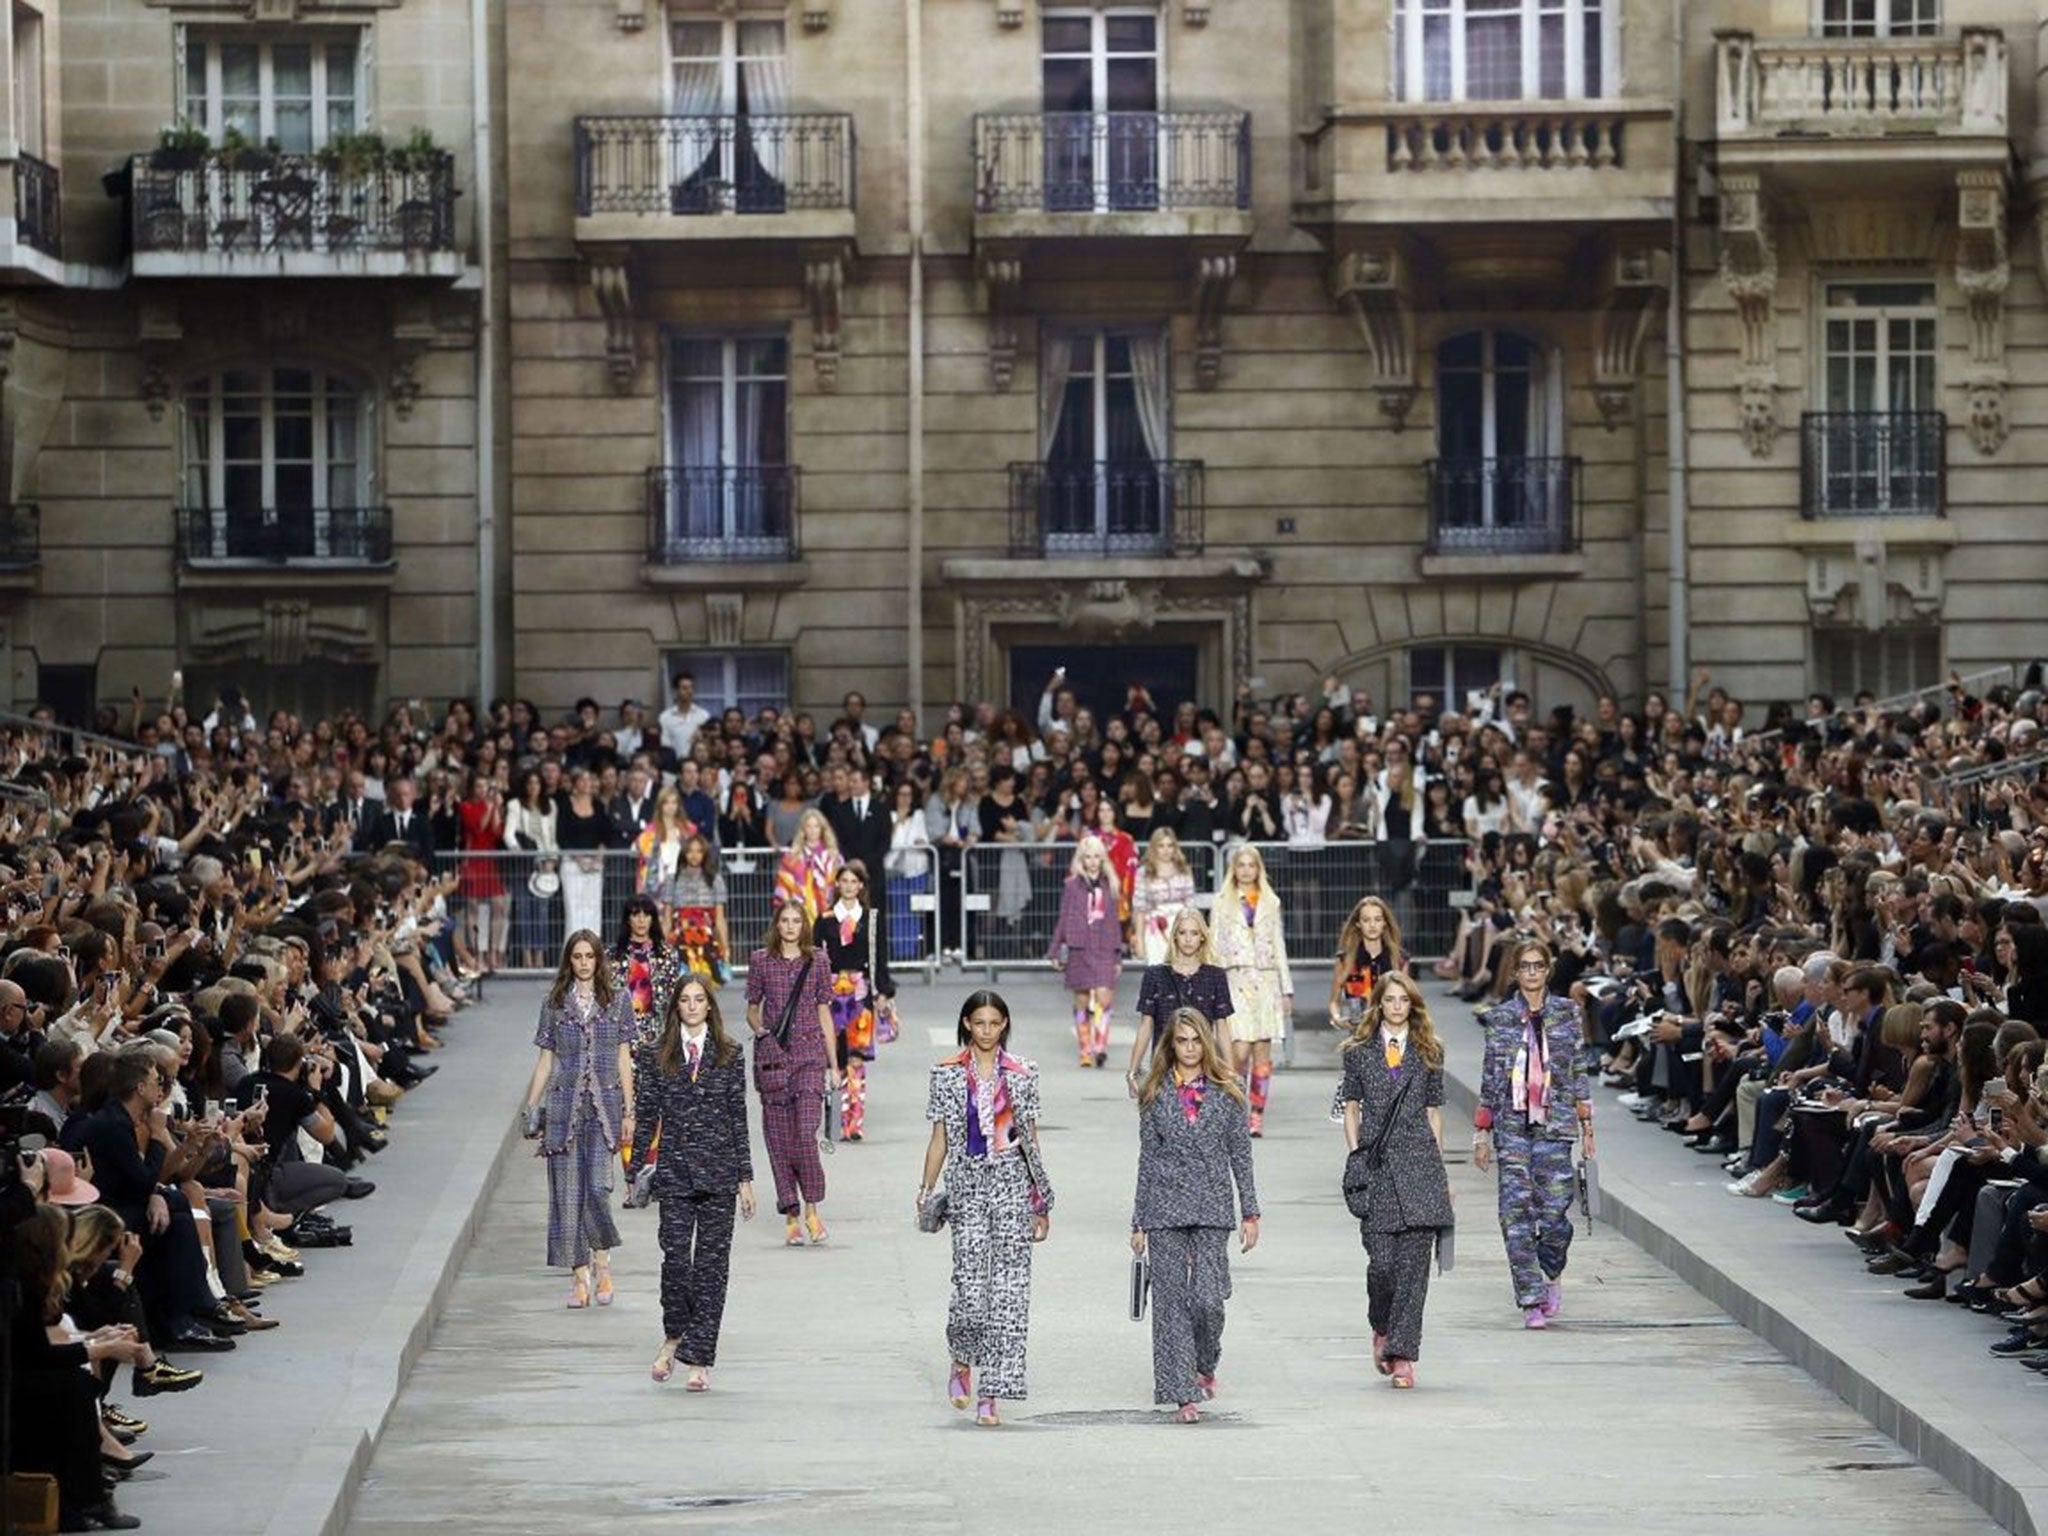 Chanel Spring/Summer 2015 show by German designer Karl Lagerfeld during the Paris Fashion Week